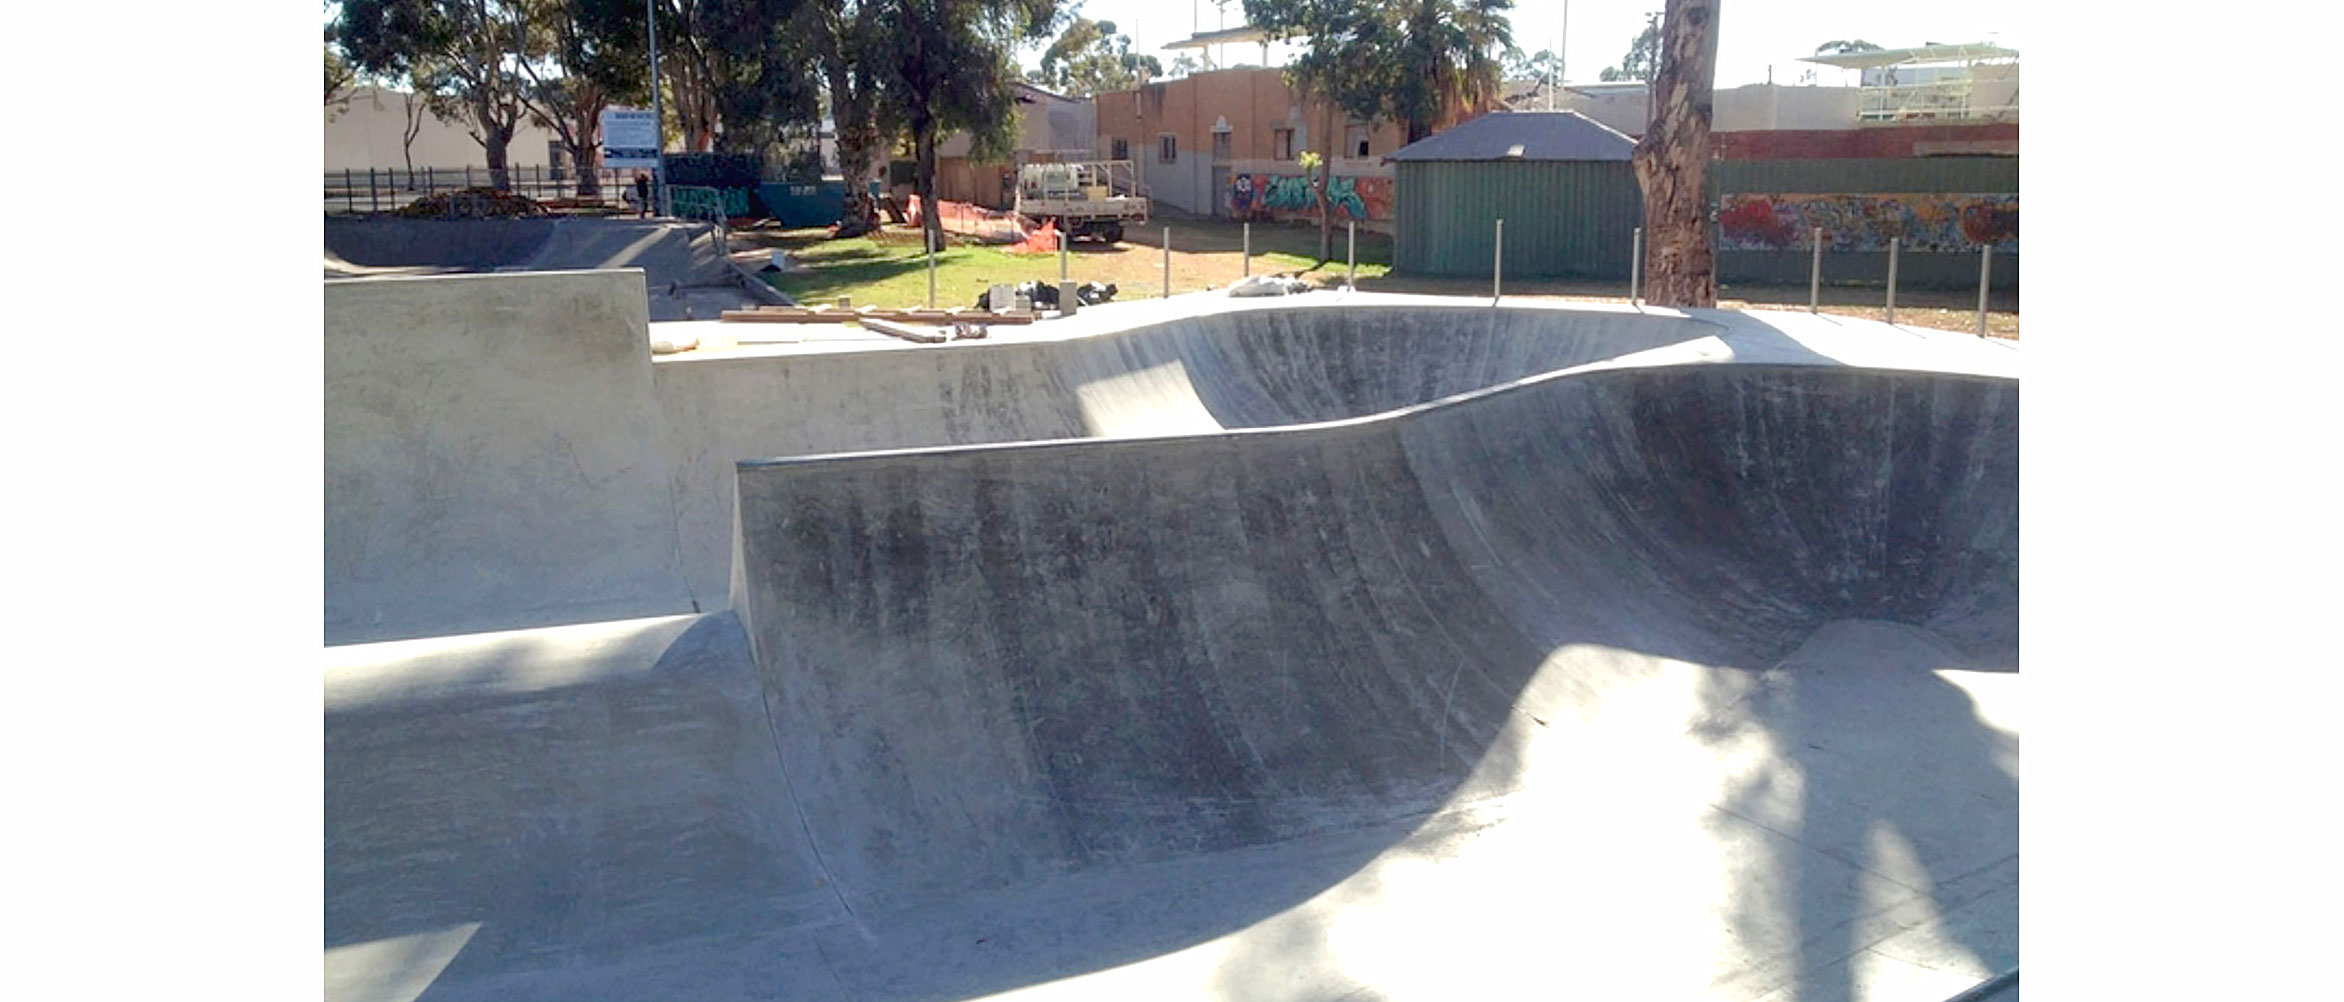 Kalgoorlie skate park Western Australia, Concrete Skateparks